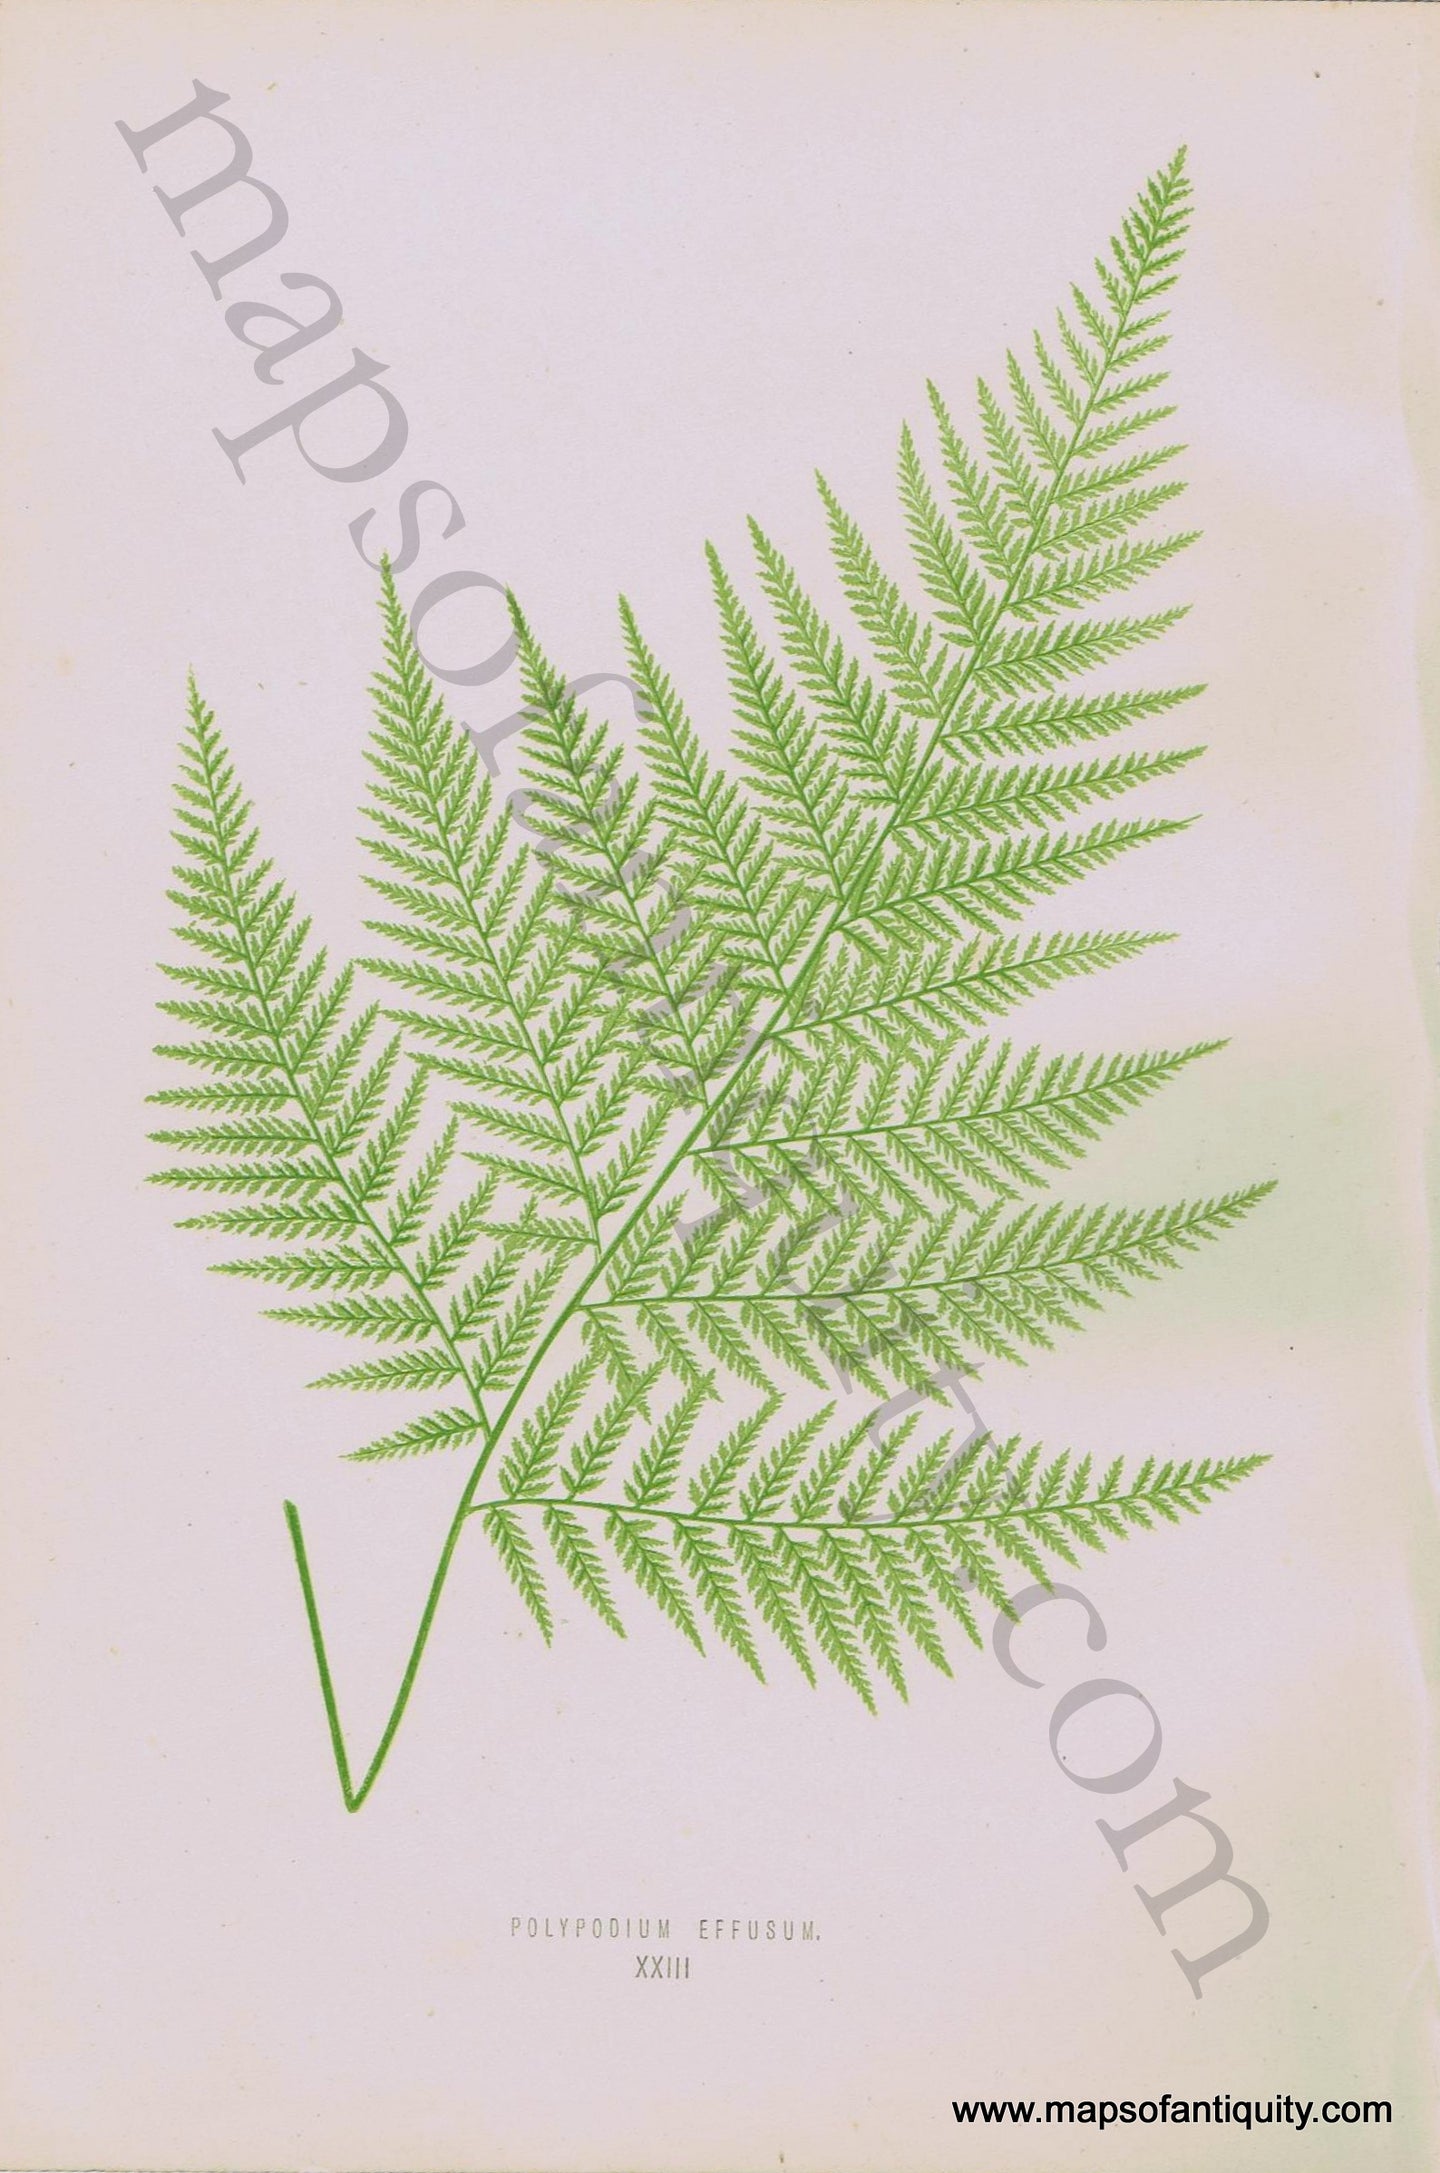 Antique-Chromoxylograph-Print-Fern-Ferns-Polypodium-effusum-1861-1864-E.J.-Lowe-Botanical-Ferns:-British-and-Exotic-1800s-19th-century-Maps-of-Antiquity